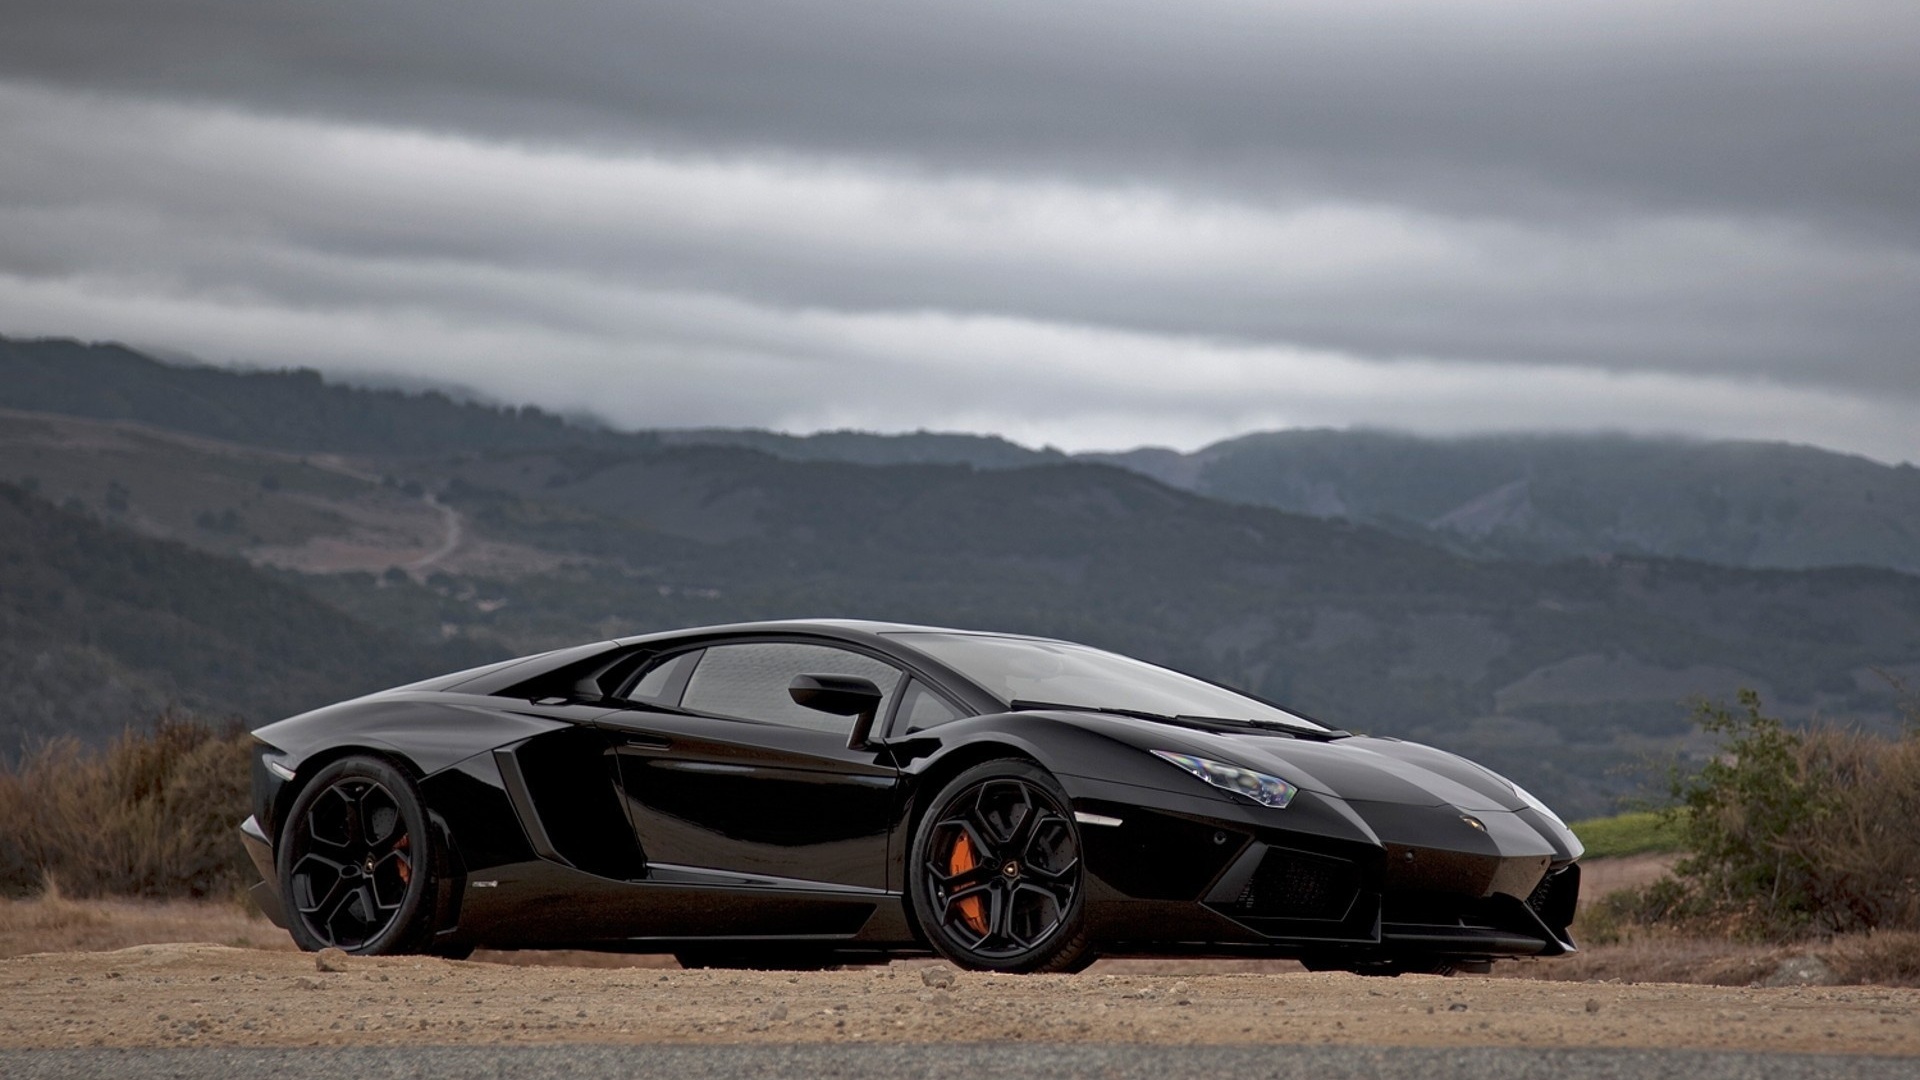 Lamborghini Aventador Black 1080p HD Wallpaper Car Bwalles